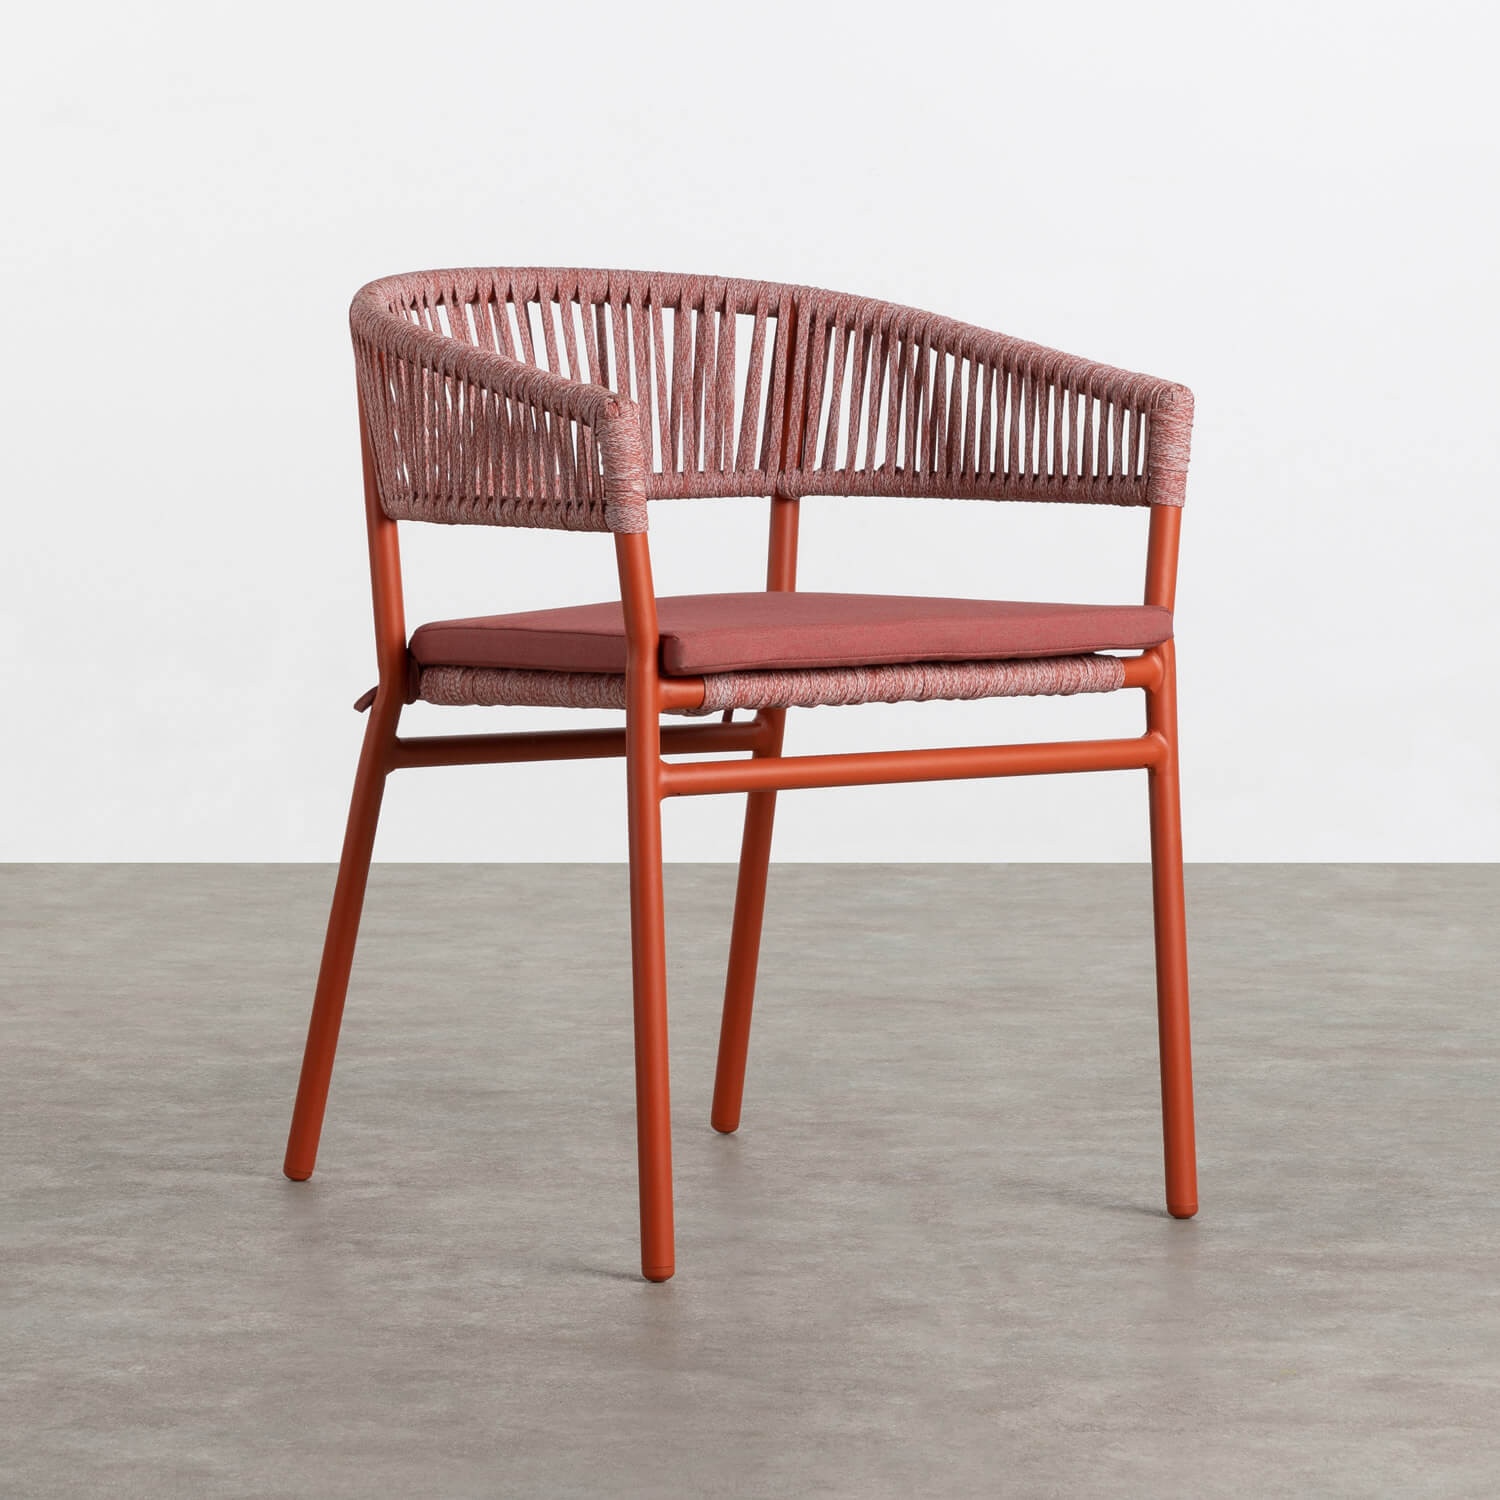 Outdoor-Stuhl mit Aluminium-Armlehnen und Keila, Galeriebild 1